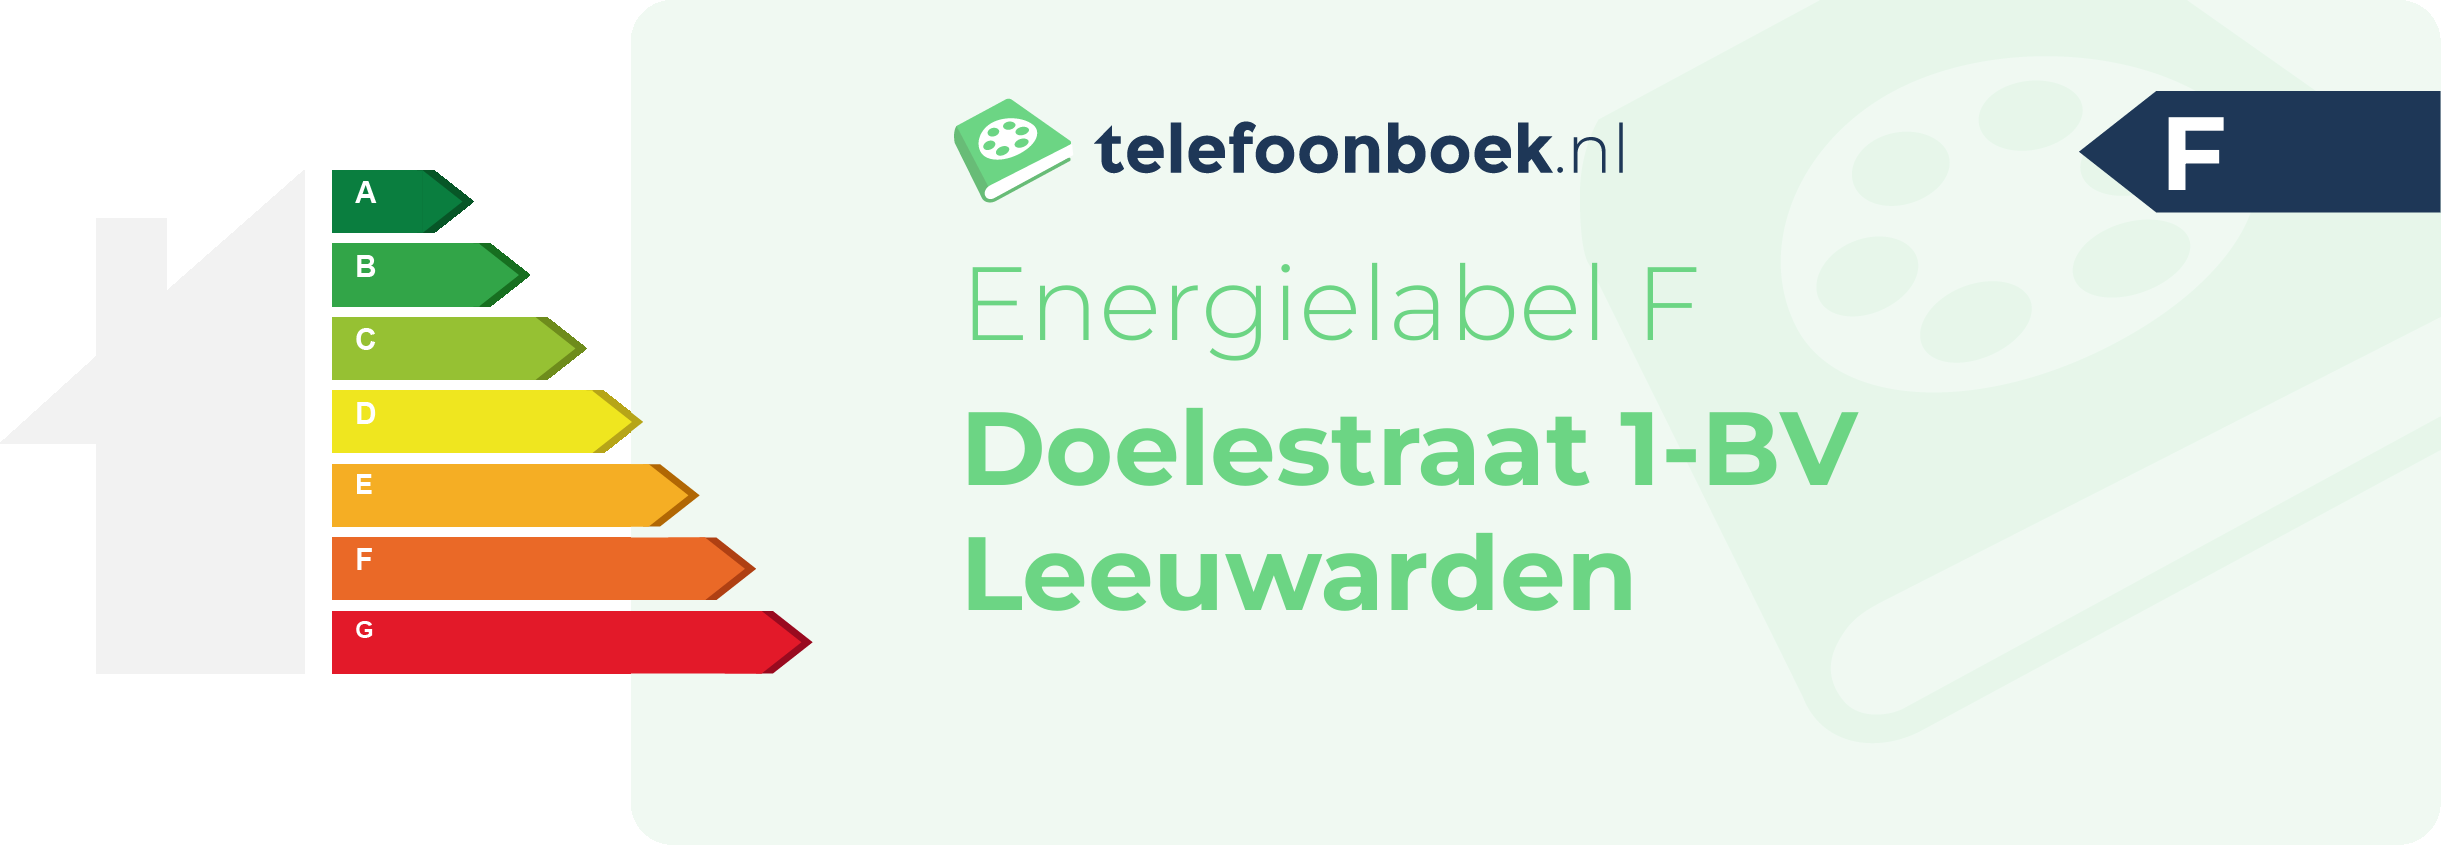 Energielabel Doelestraat 1-BV Leeuwarden